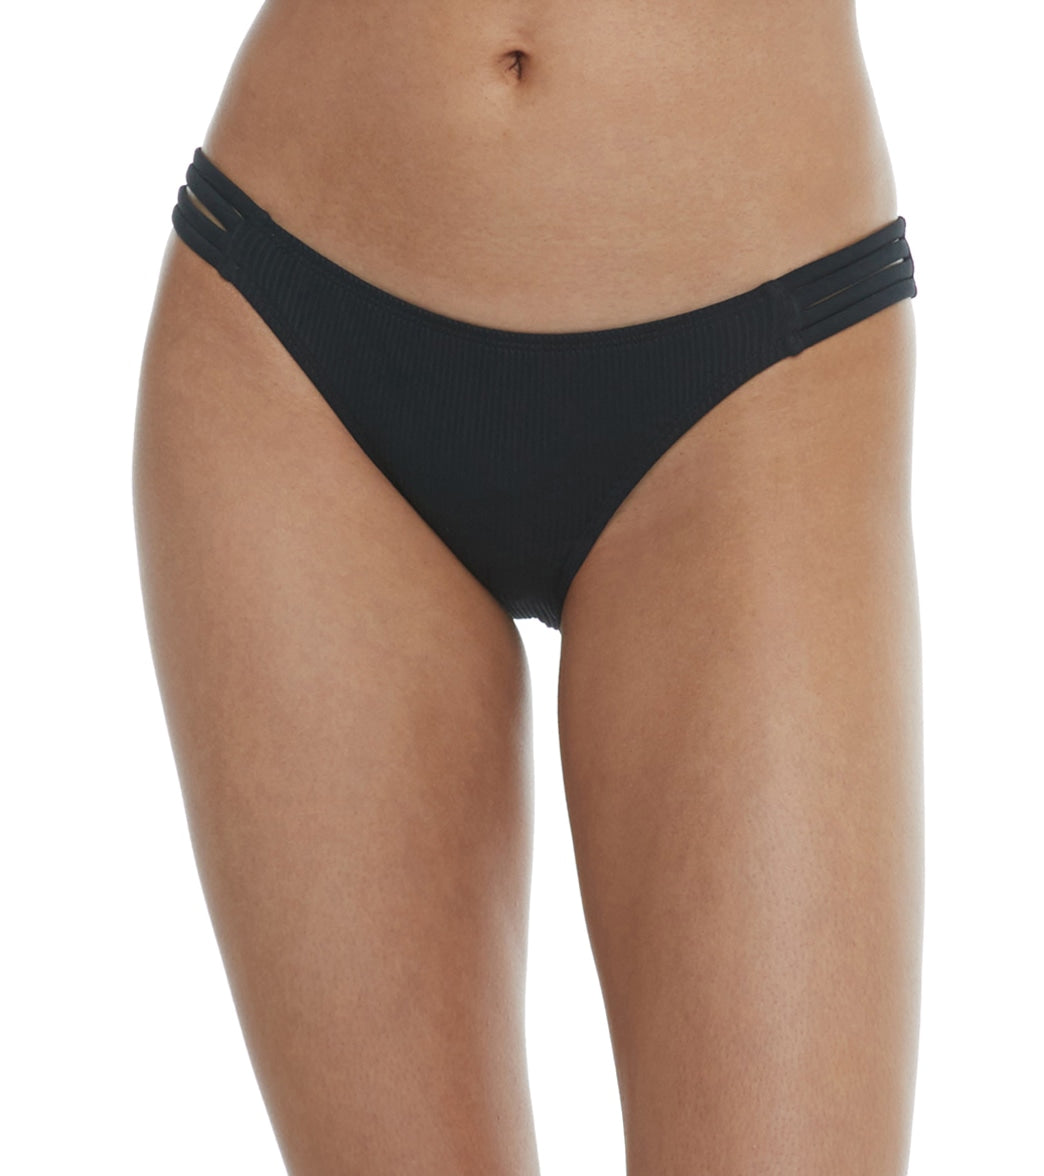 Body Glove Constellation Laurie Bikini Bottom - Black Moderate to